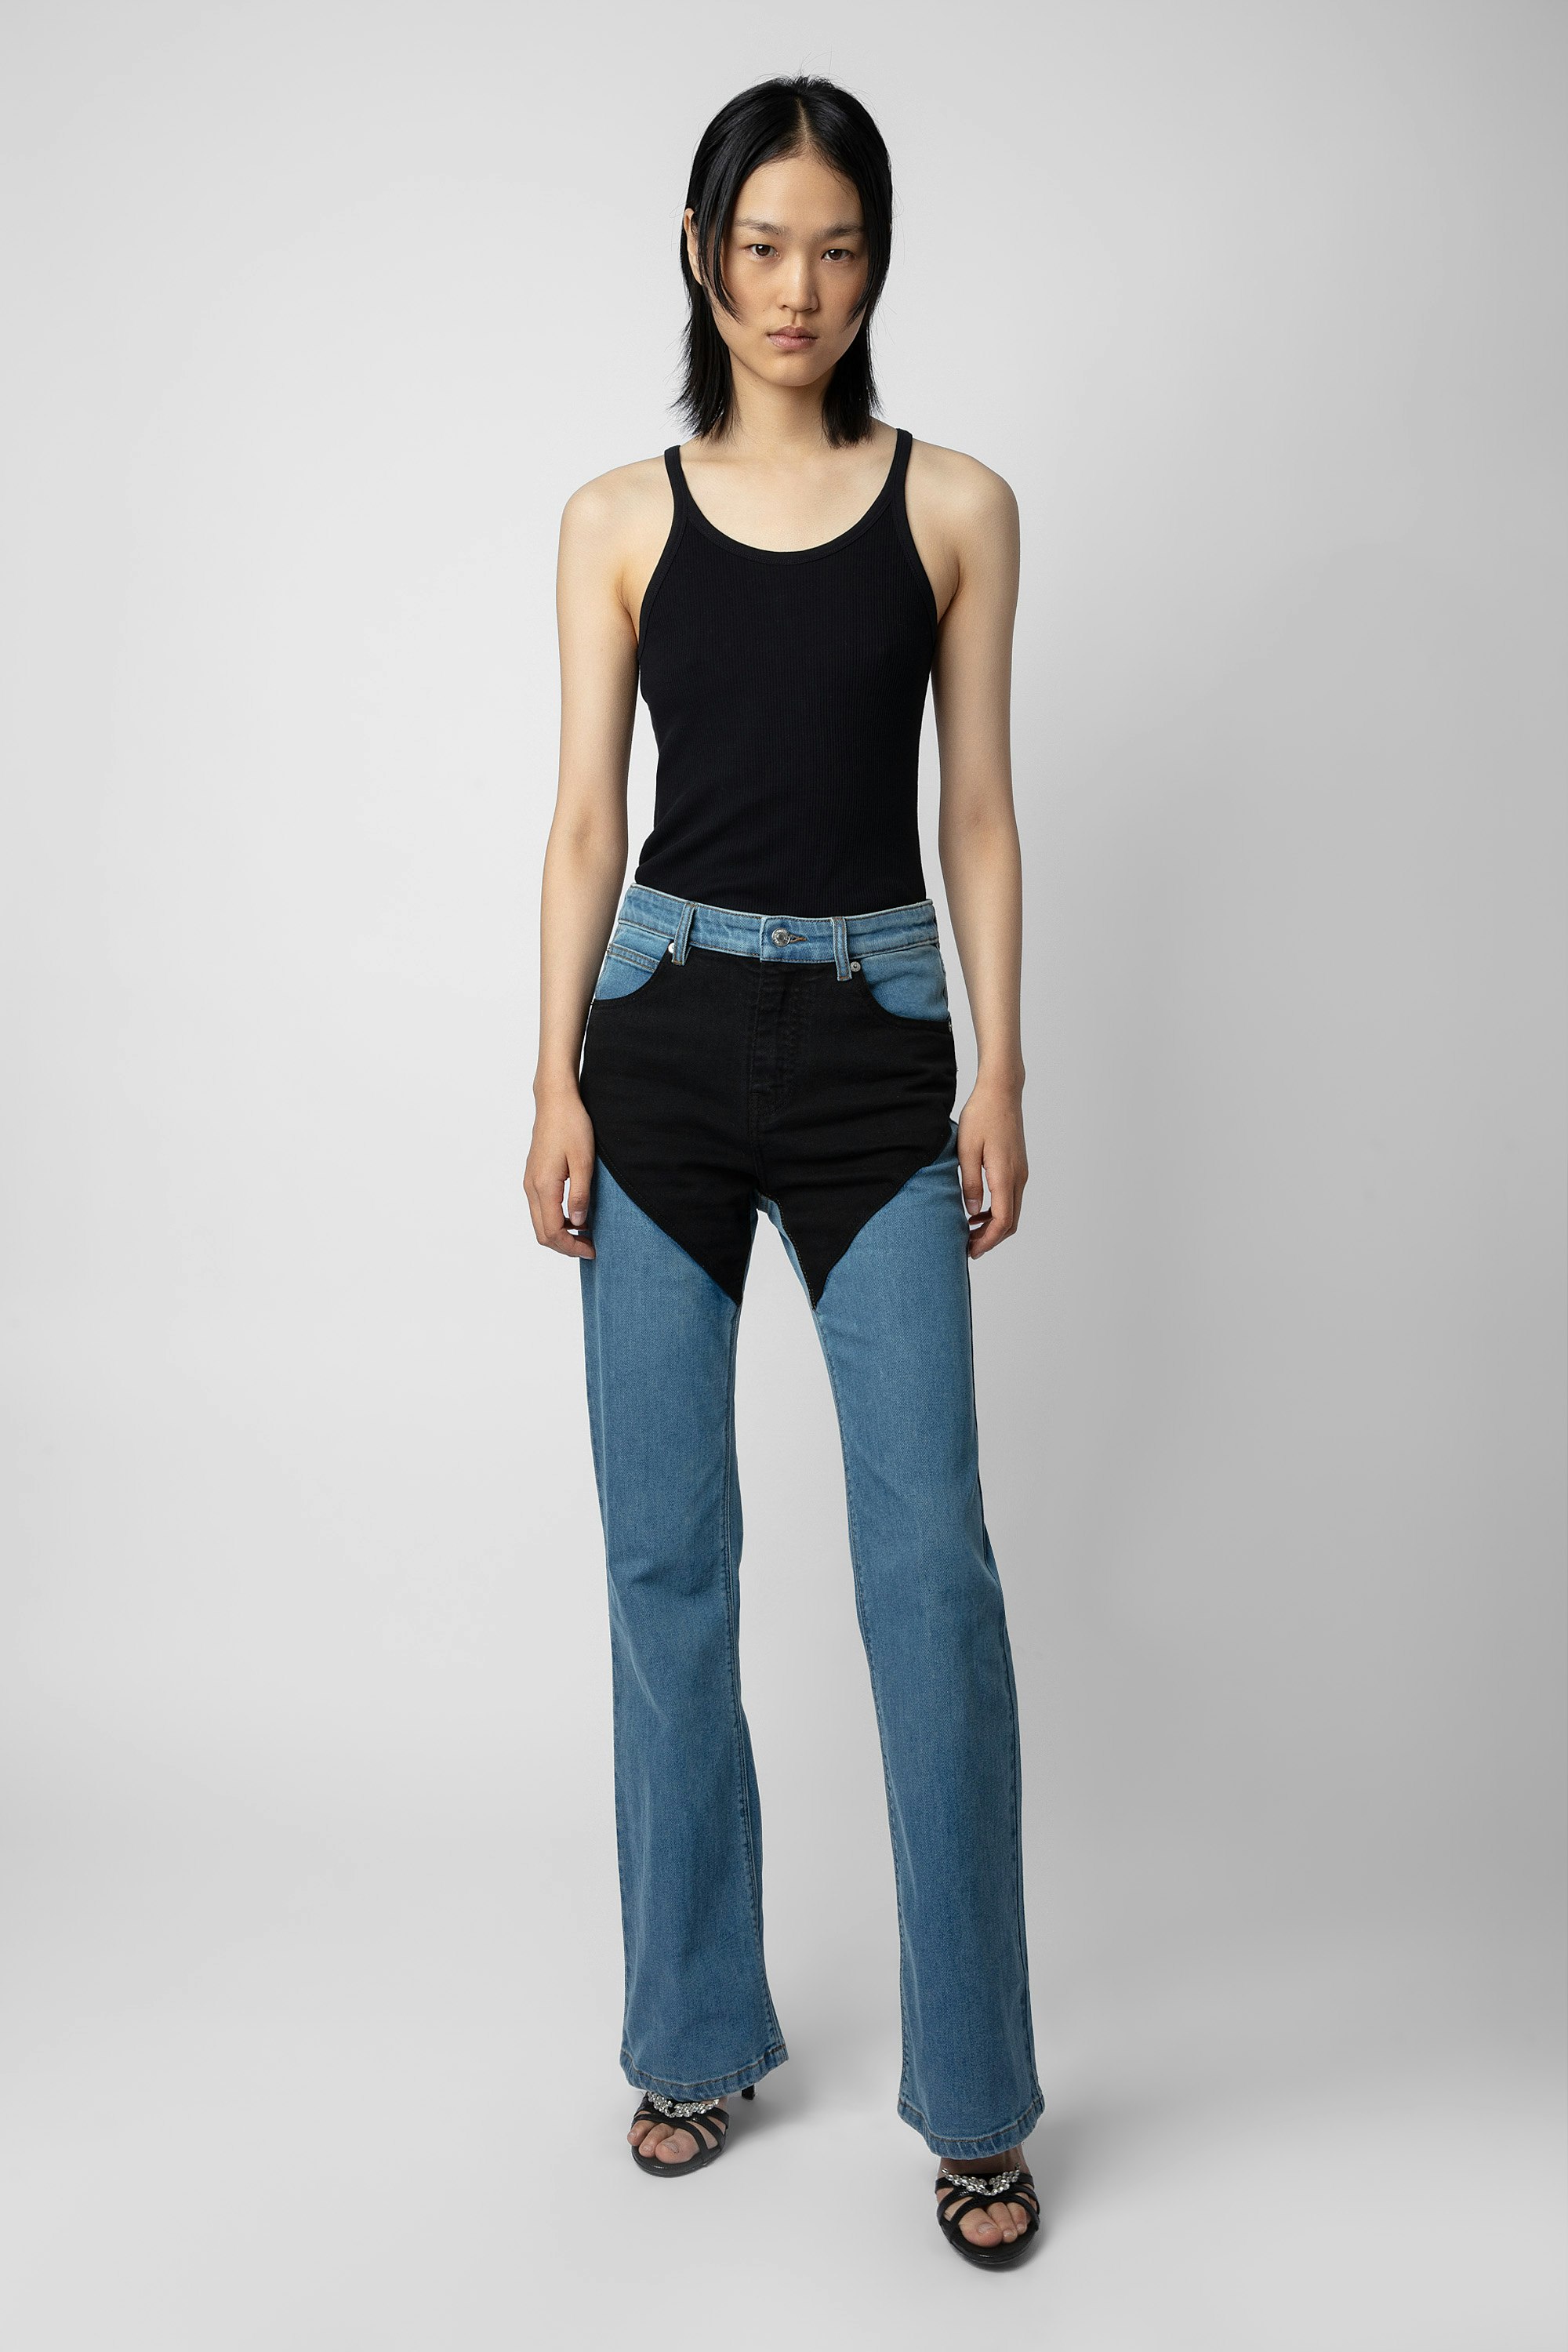 Emila Jeans - Women’s wide-leg blue denim jeans with contrasting black panels.